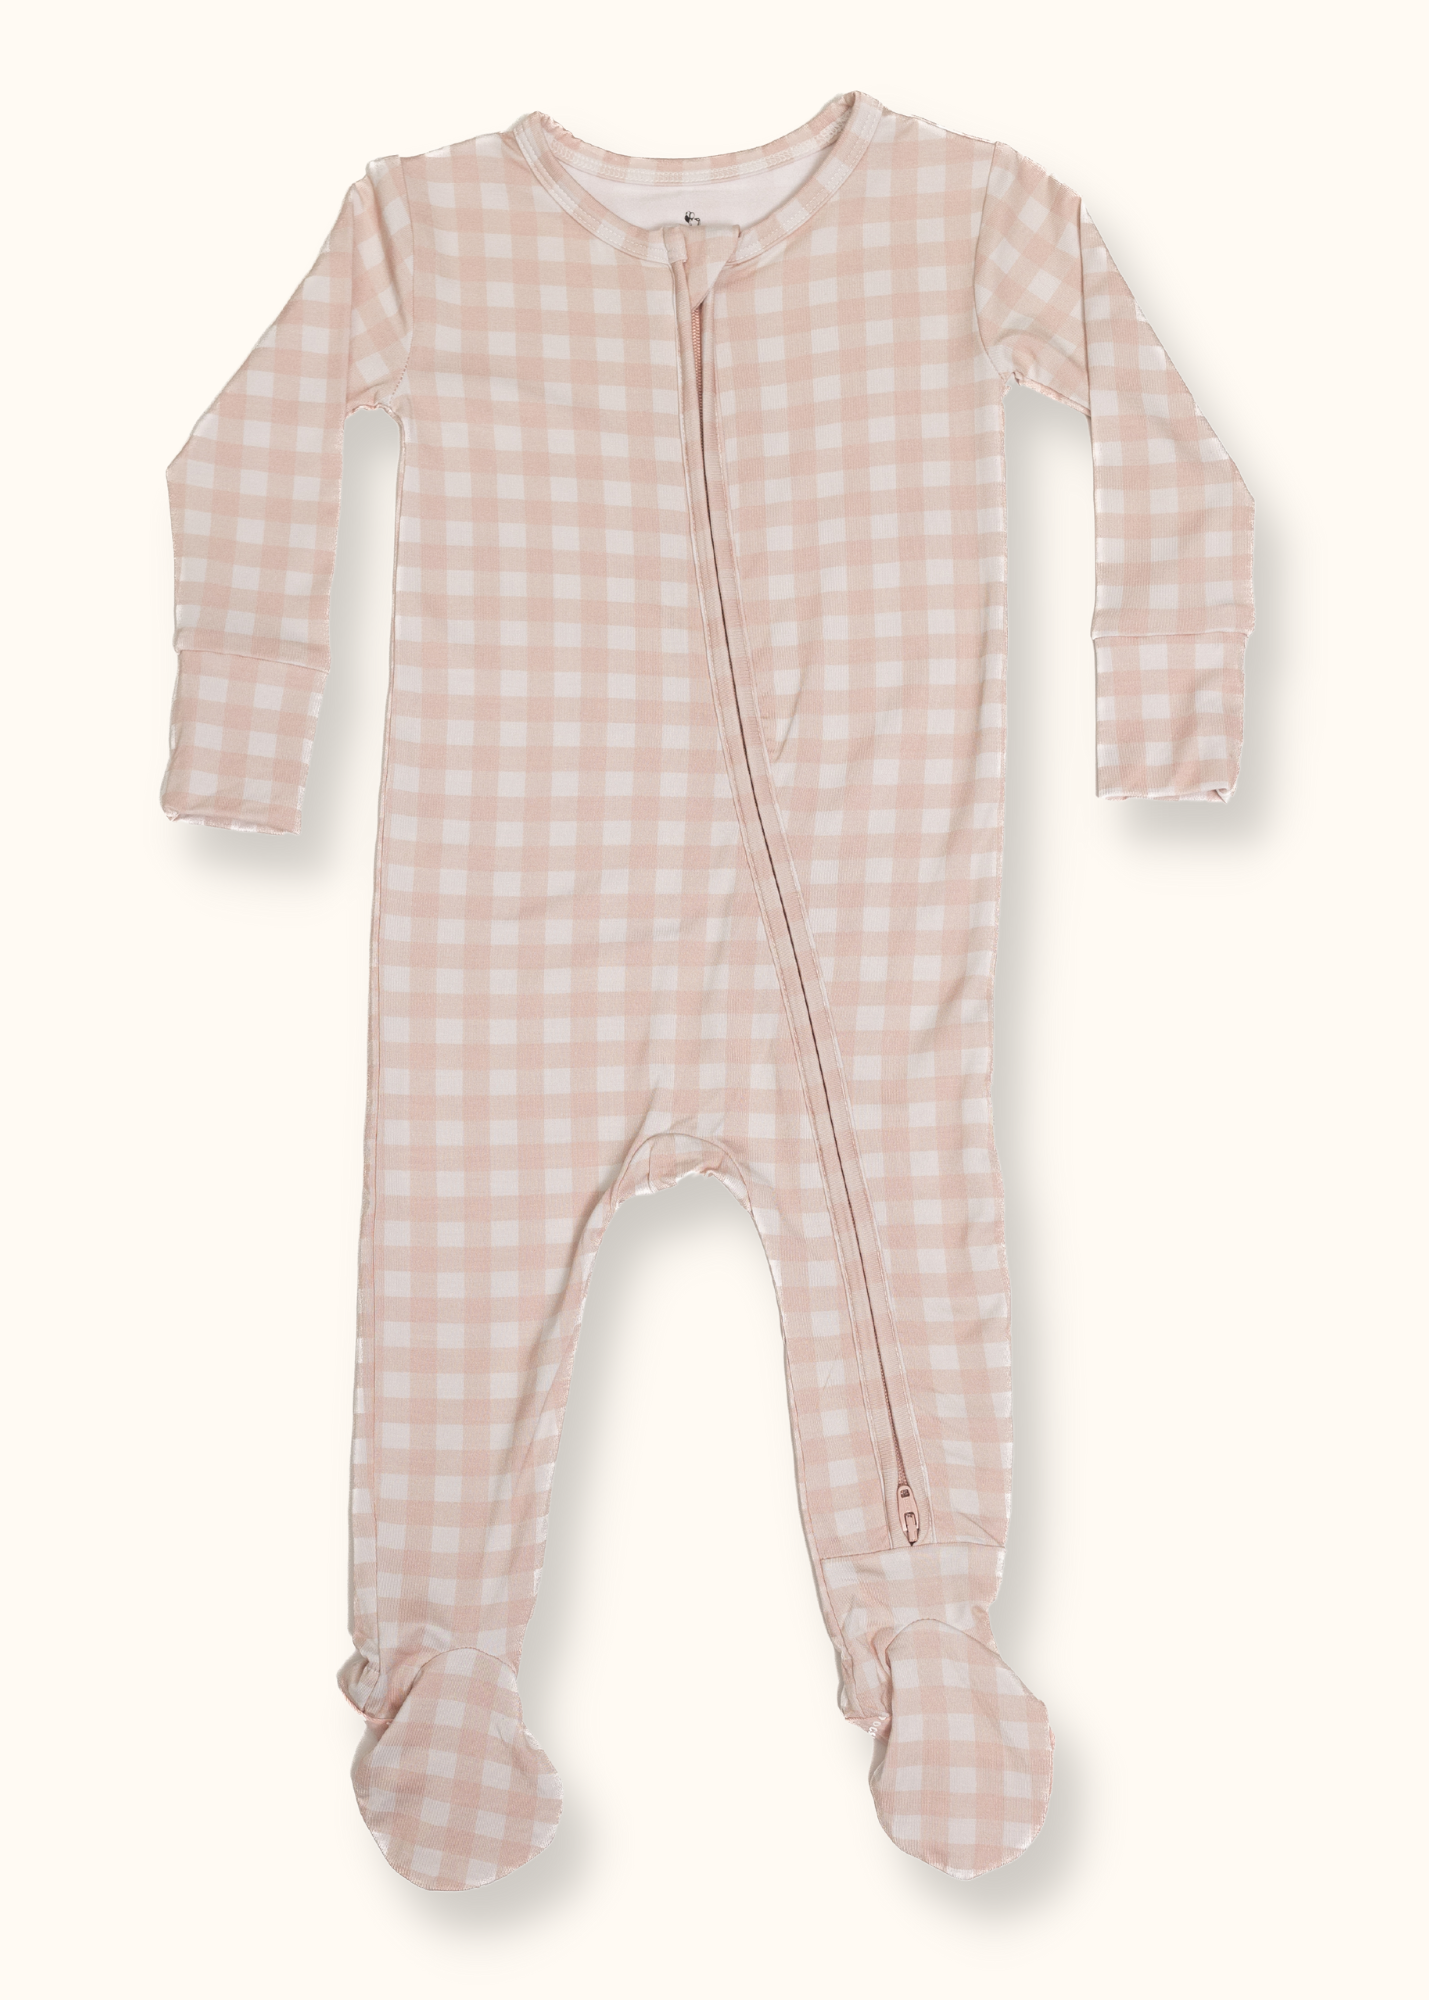 Pink Gingham Footie Pajama